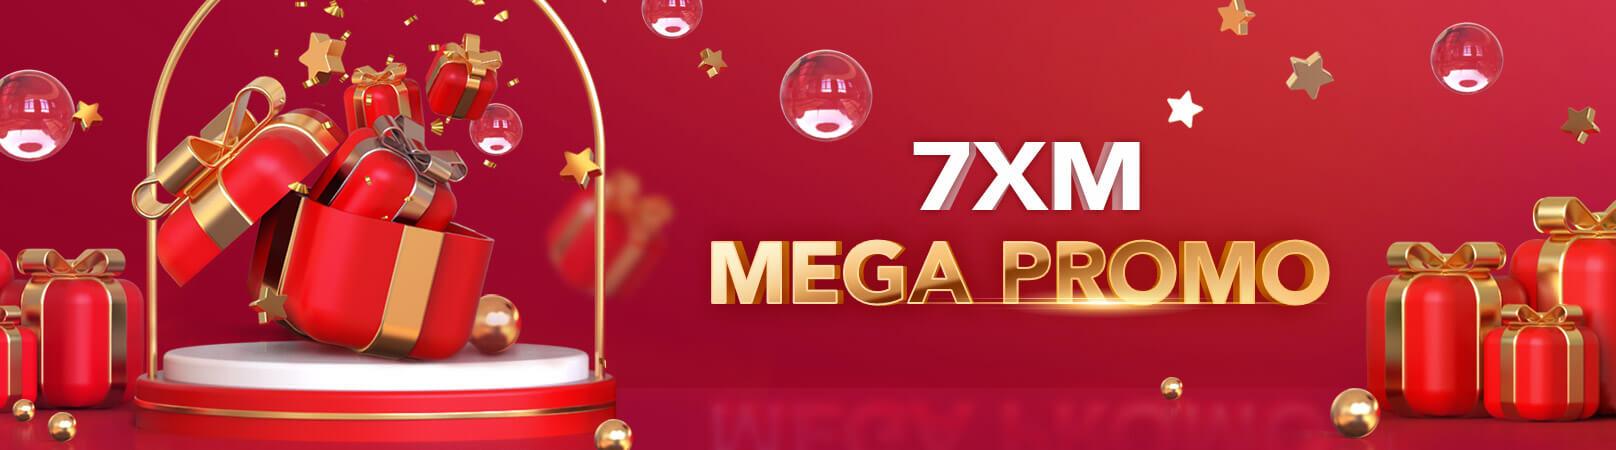 mega promo banner